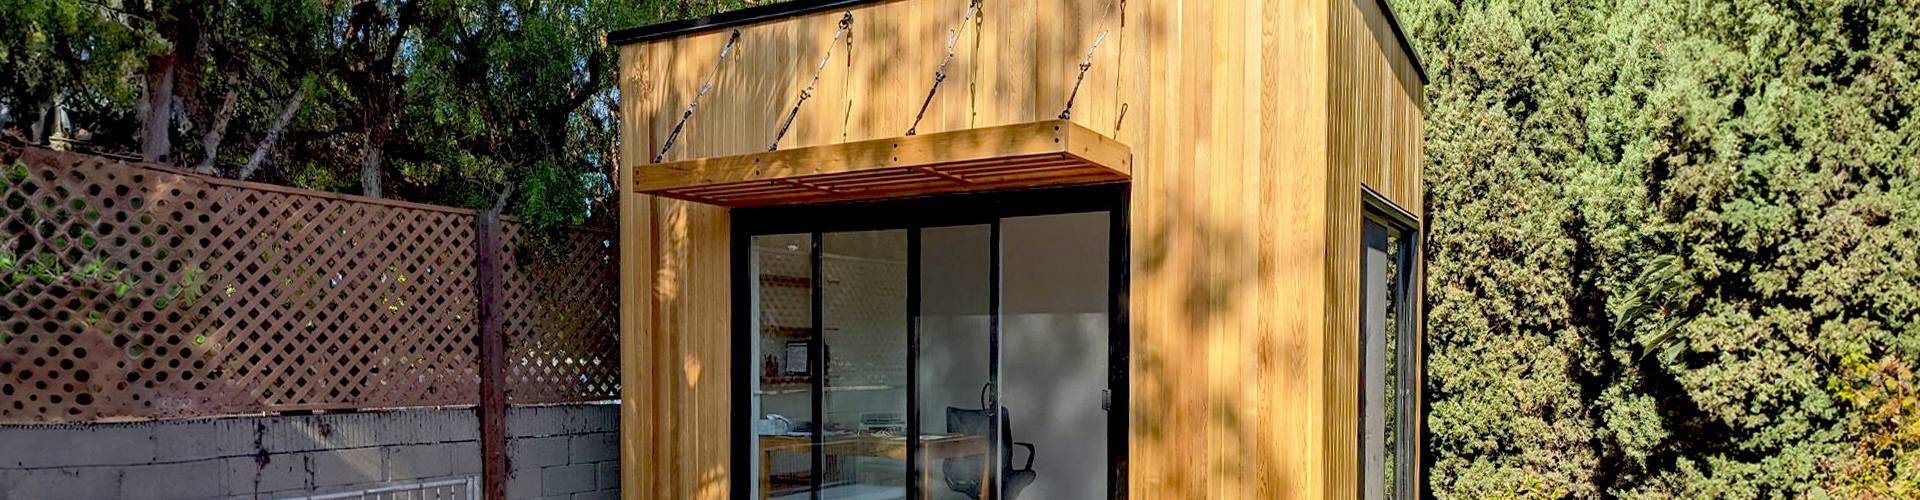 Backyard Modern Prefab Quadra Home Office Studio Kit - Summerwood Products